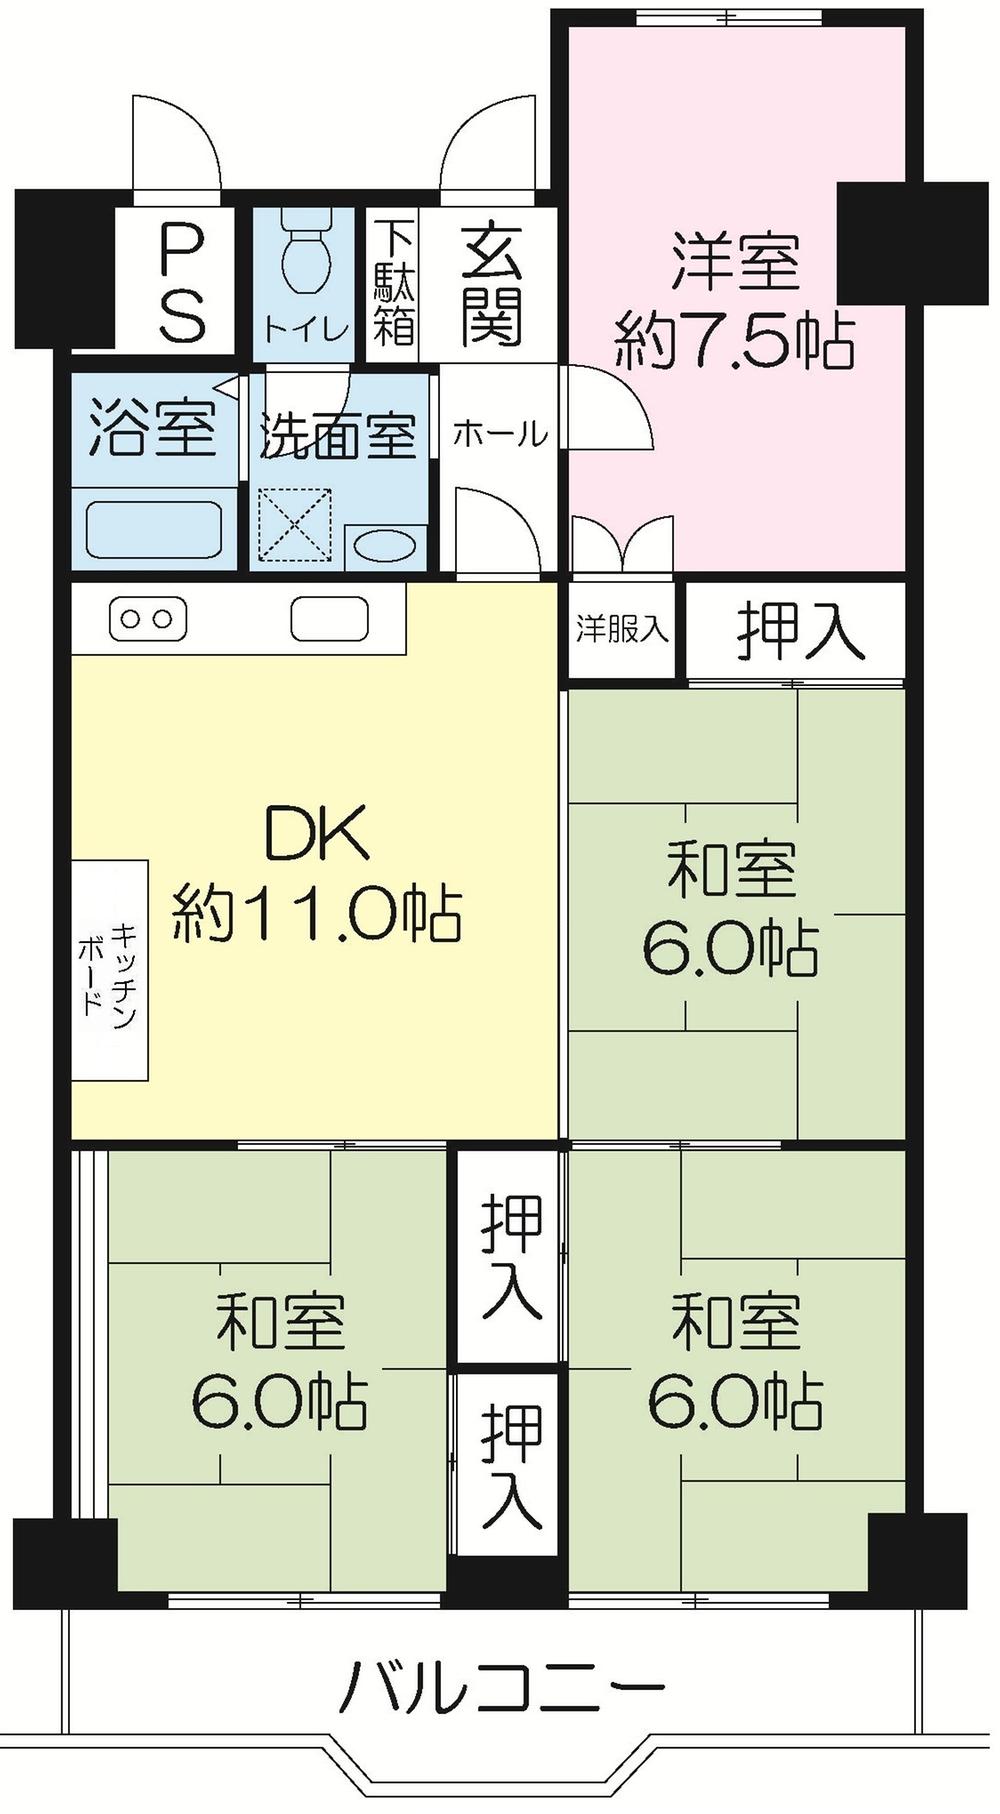 Floor plan. 4DK, Price 15 million yen, Occupied area 81.61 sq m , Balcony area 9.1 sq m